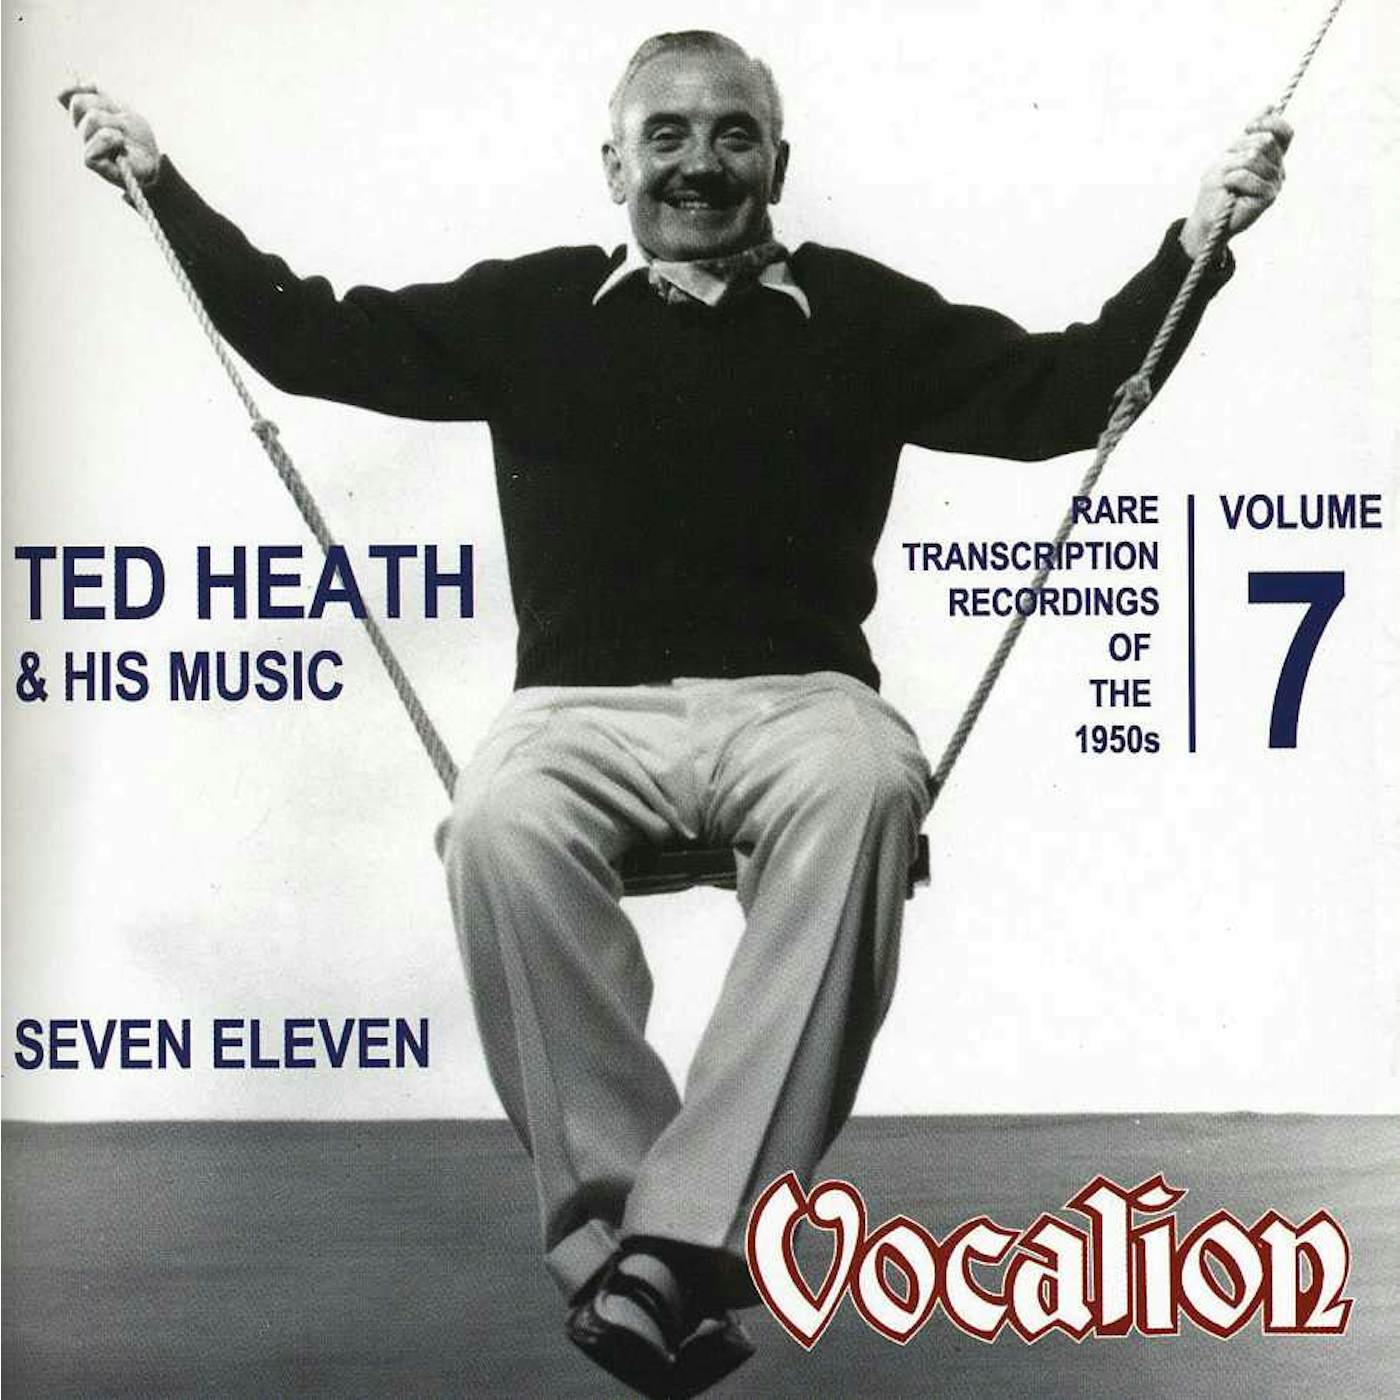 Ted Heath RARE TRANSCRIPTION RECORDINGS OF 1950S 7 CD